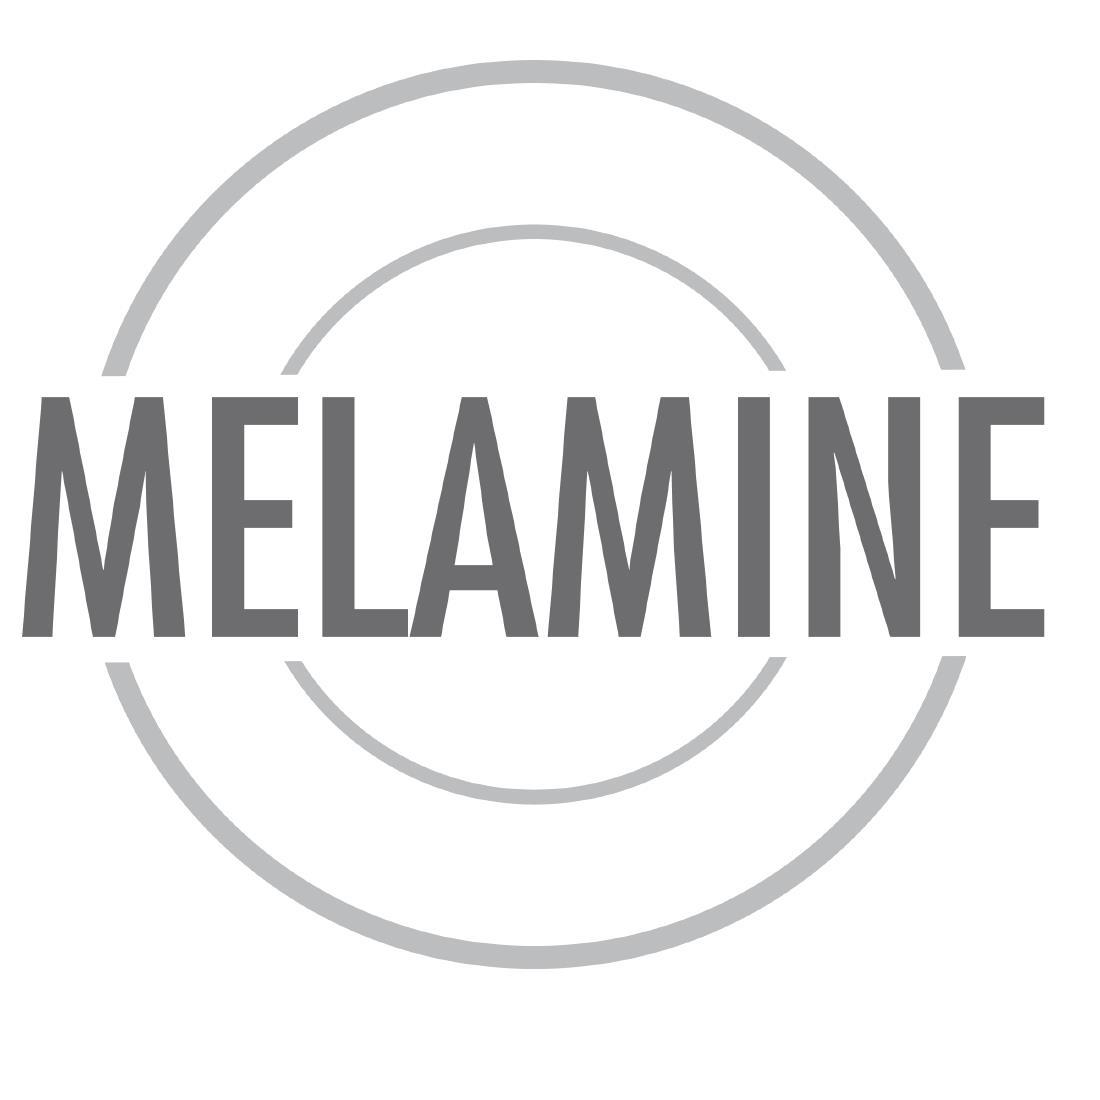 Olympia Kristallon Melamine Fluted Ramekins White 89mm (Pack of 12) - T839  - 2